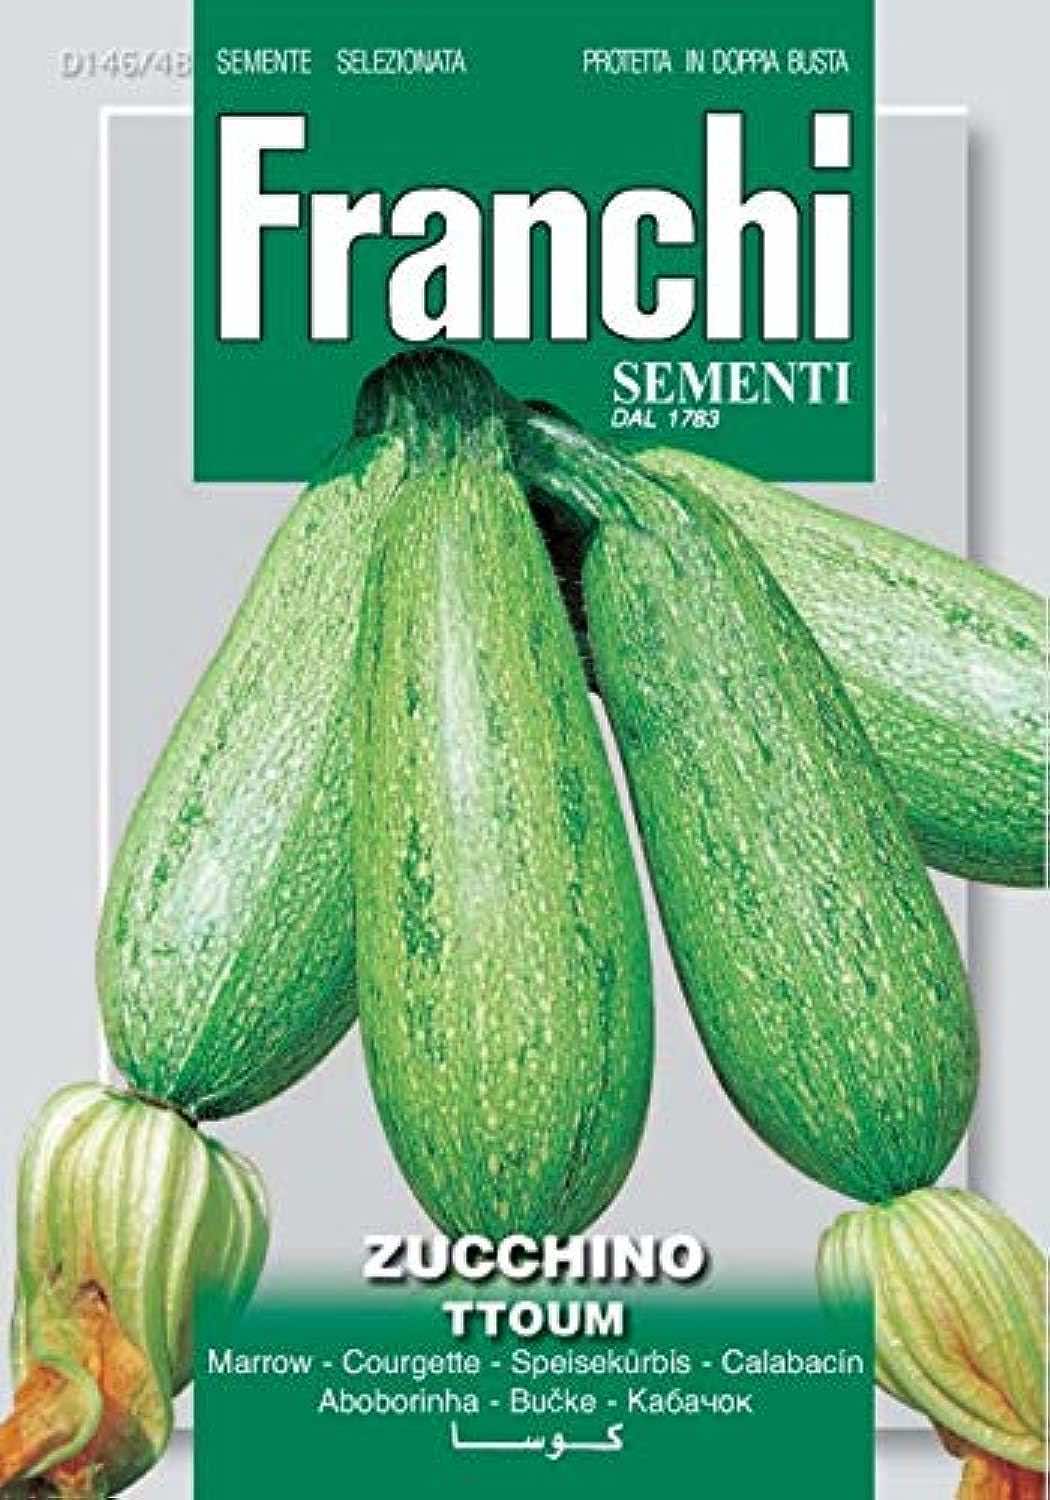 Franchi Zucchino Ttoum Squash Seeds - LGC